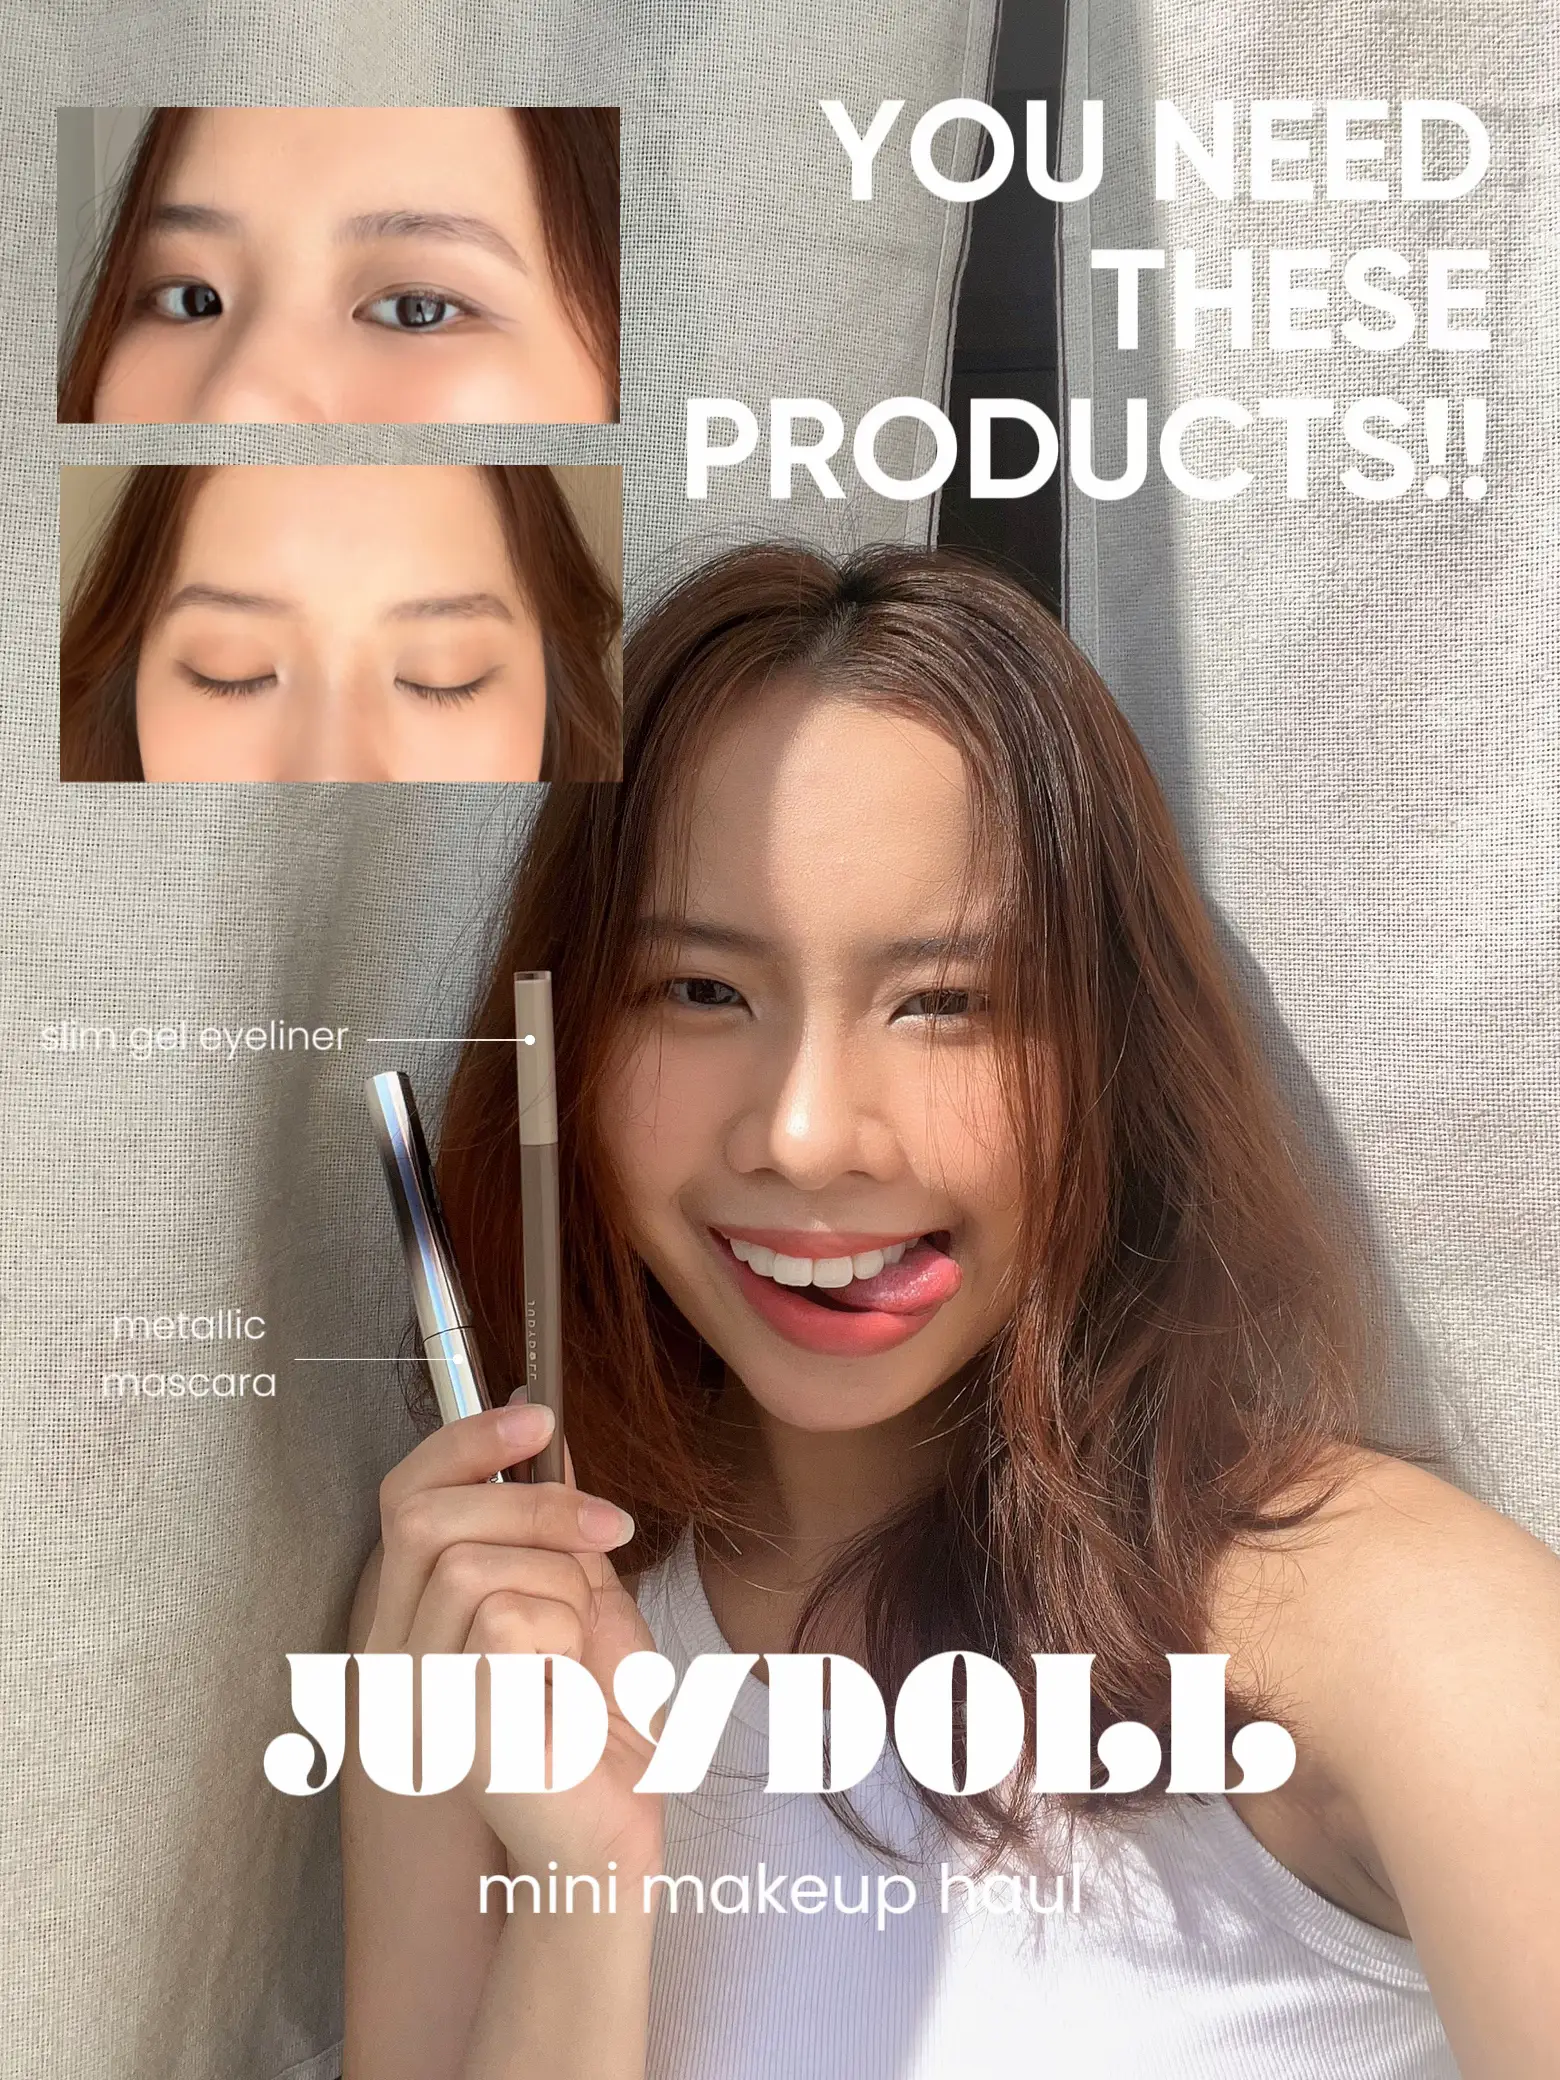 Judydoll mascara : r/MakeupAddiction